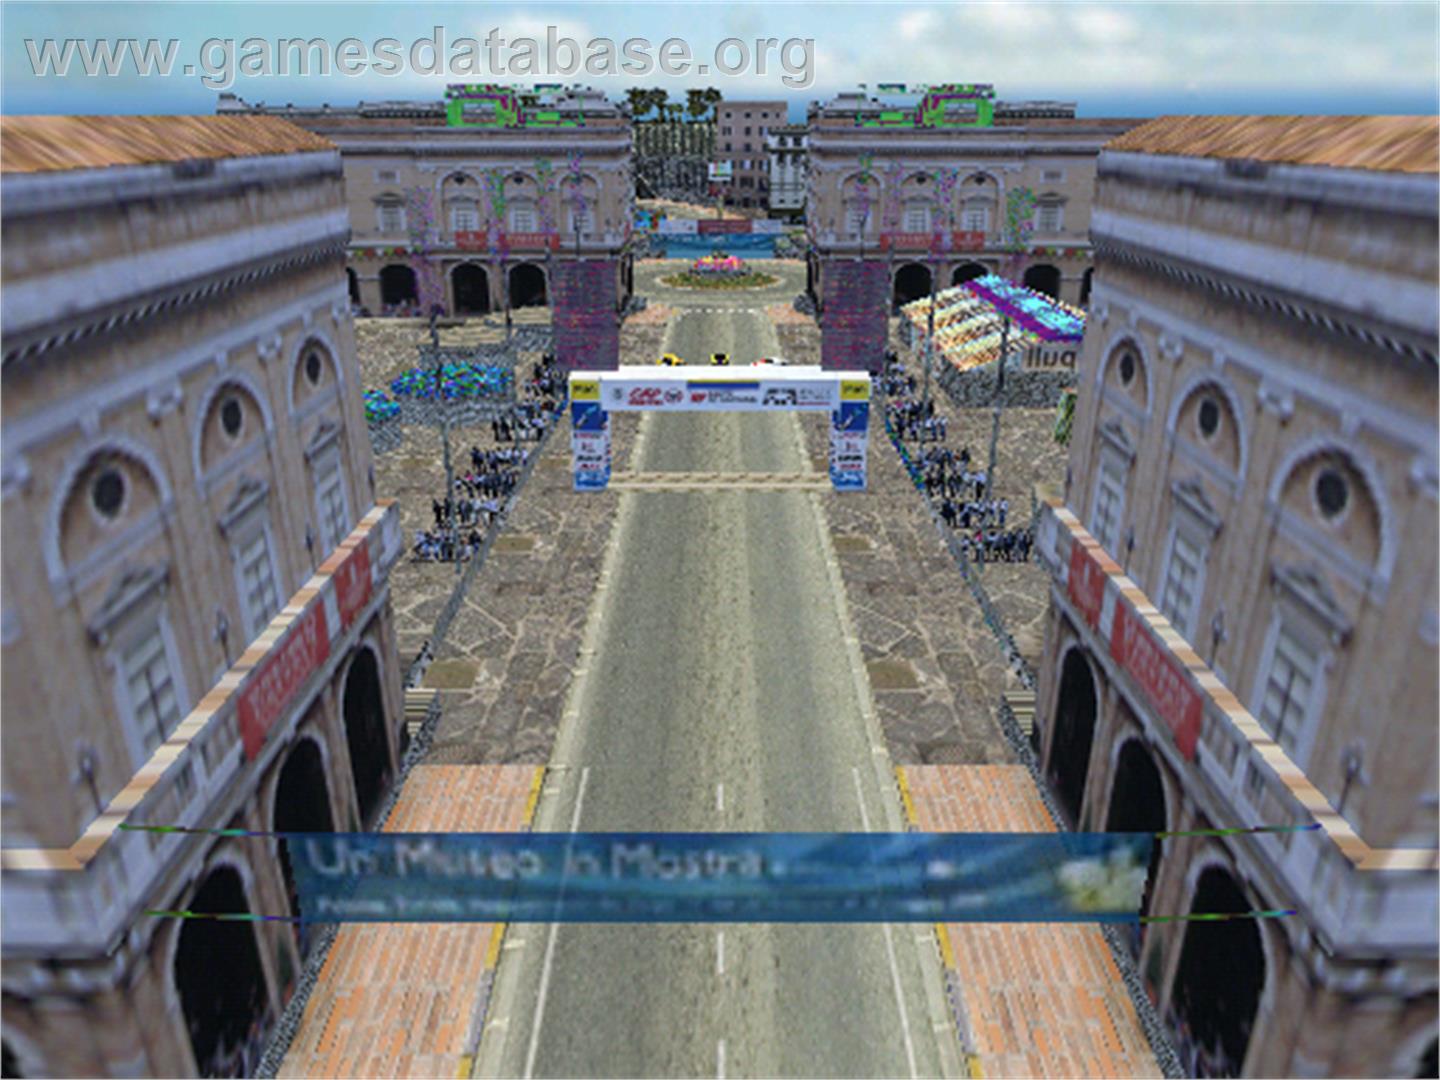 GTI Club 2 - Arcade - Artwork - In Game